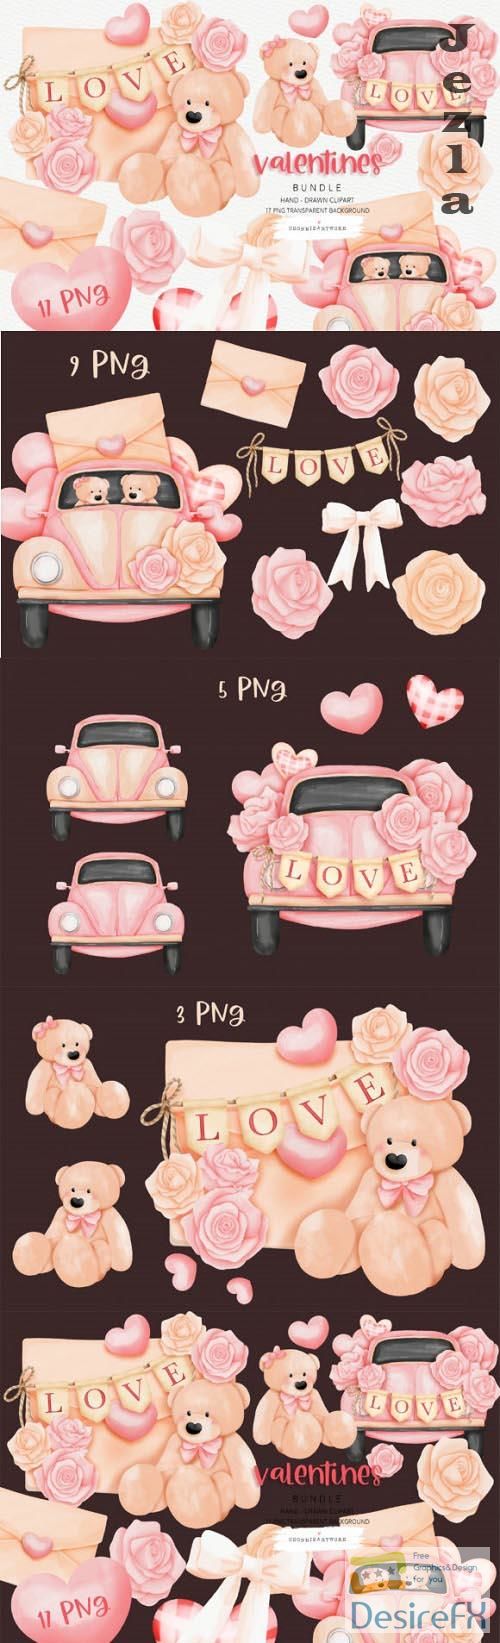 Valentine's Day Teddy Bear and VW Car